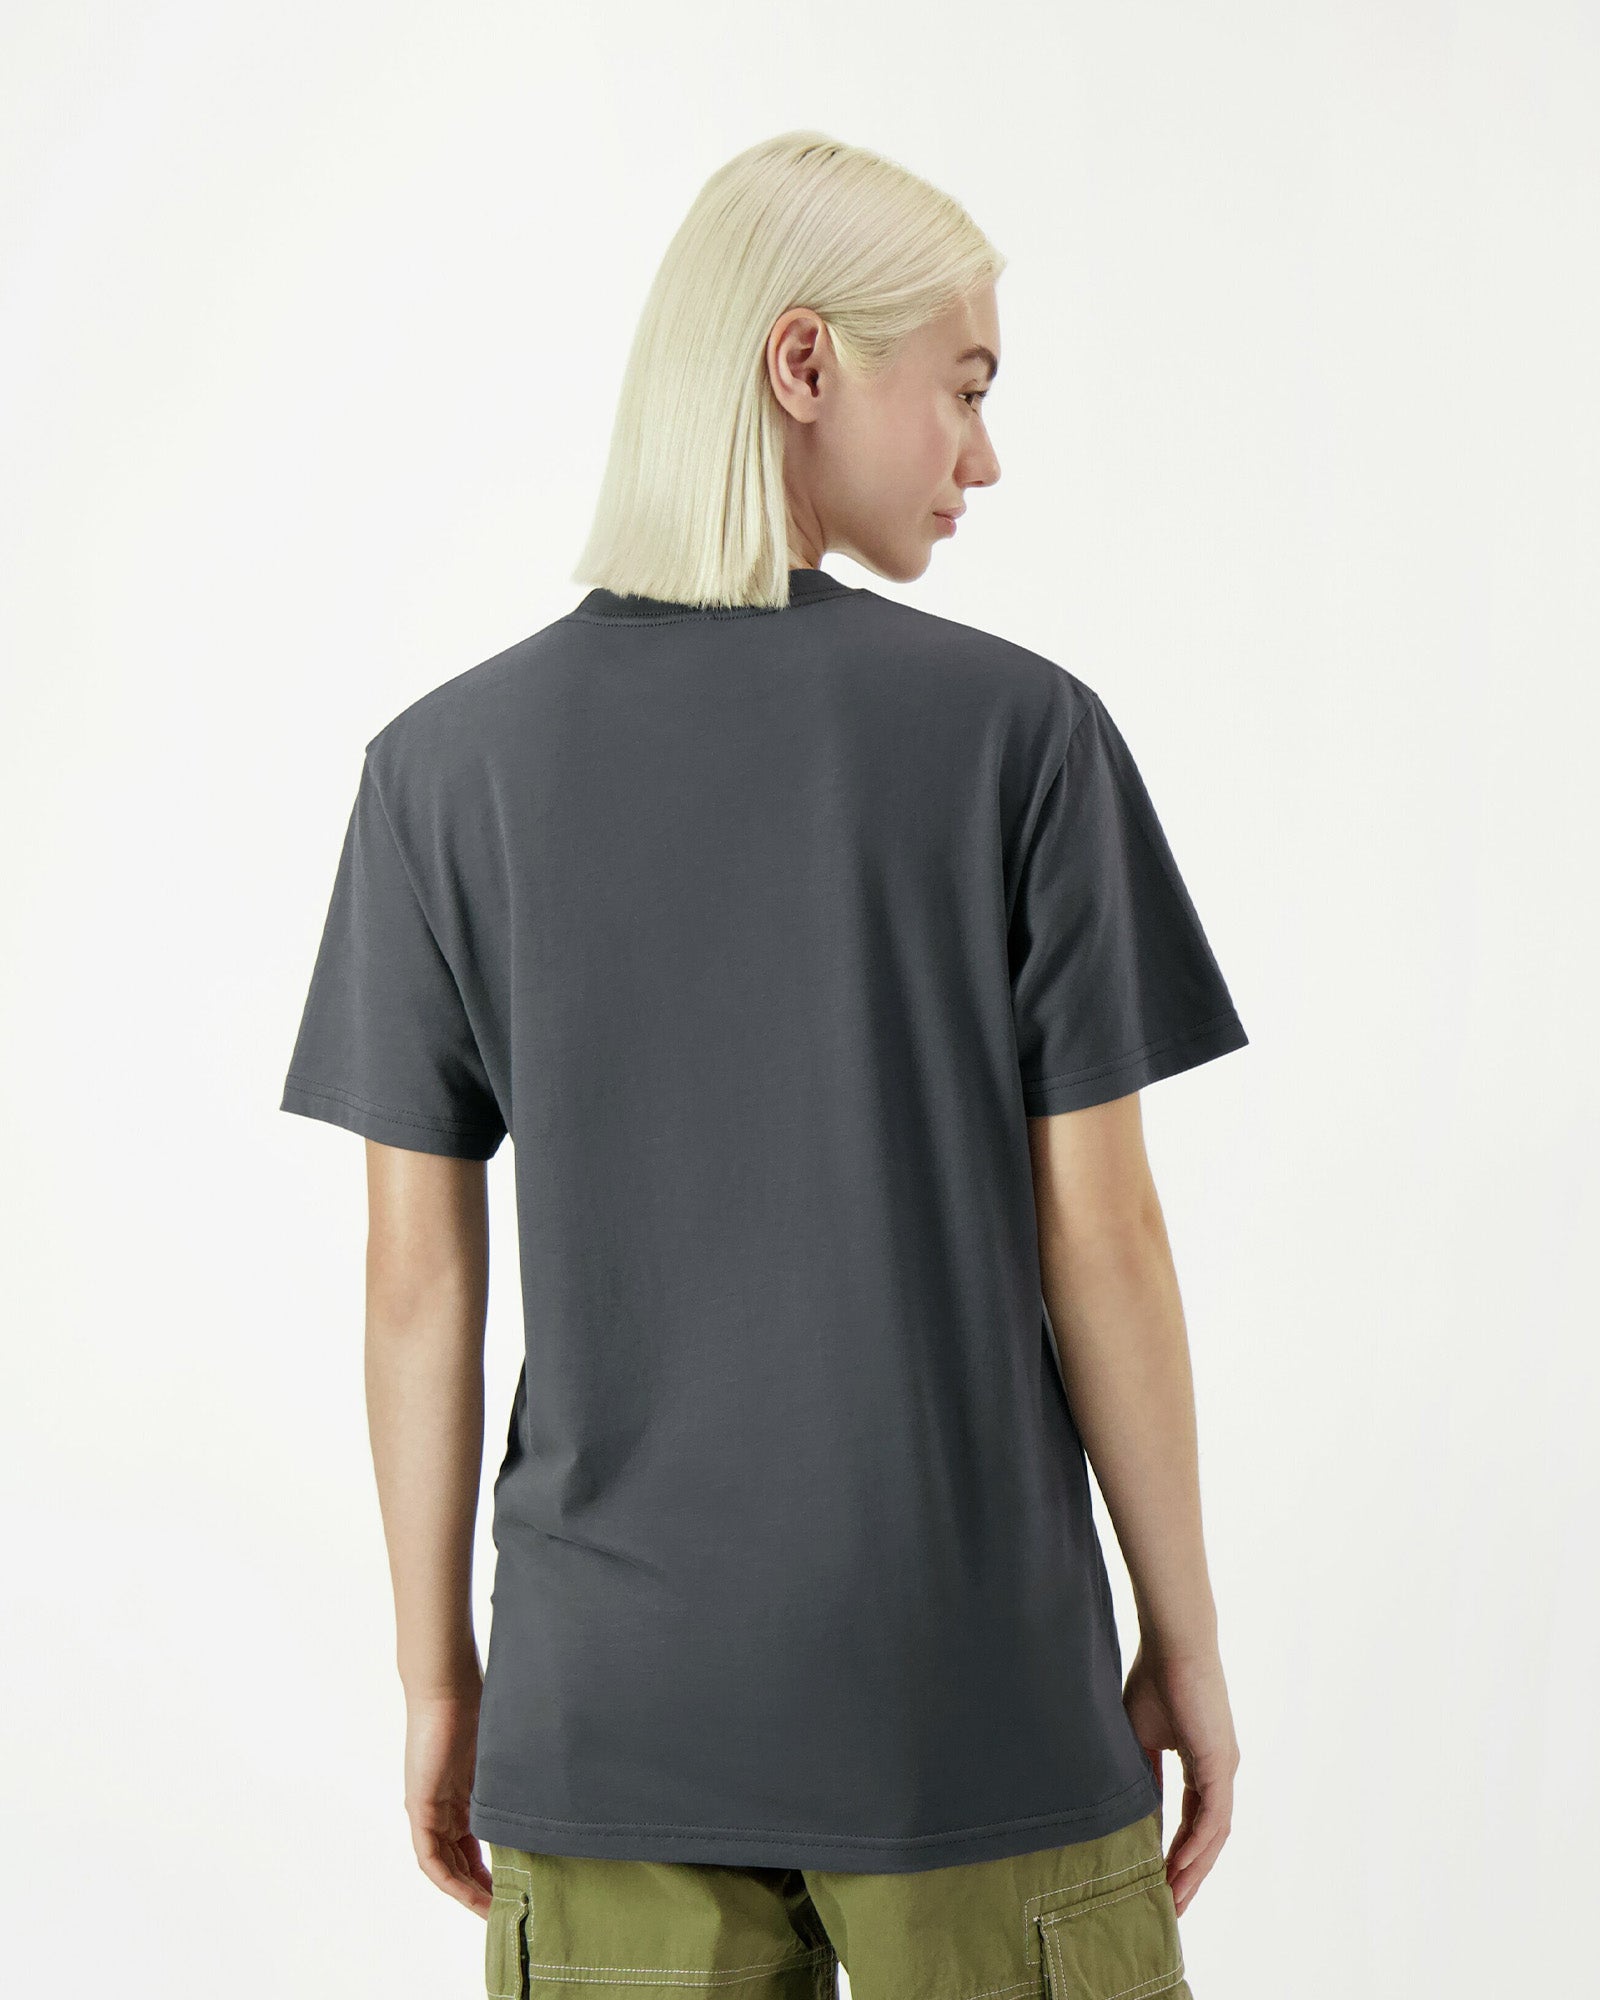 Sueded Unisex Short Sleeve T-shirt - Asphalt